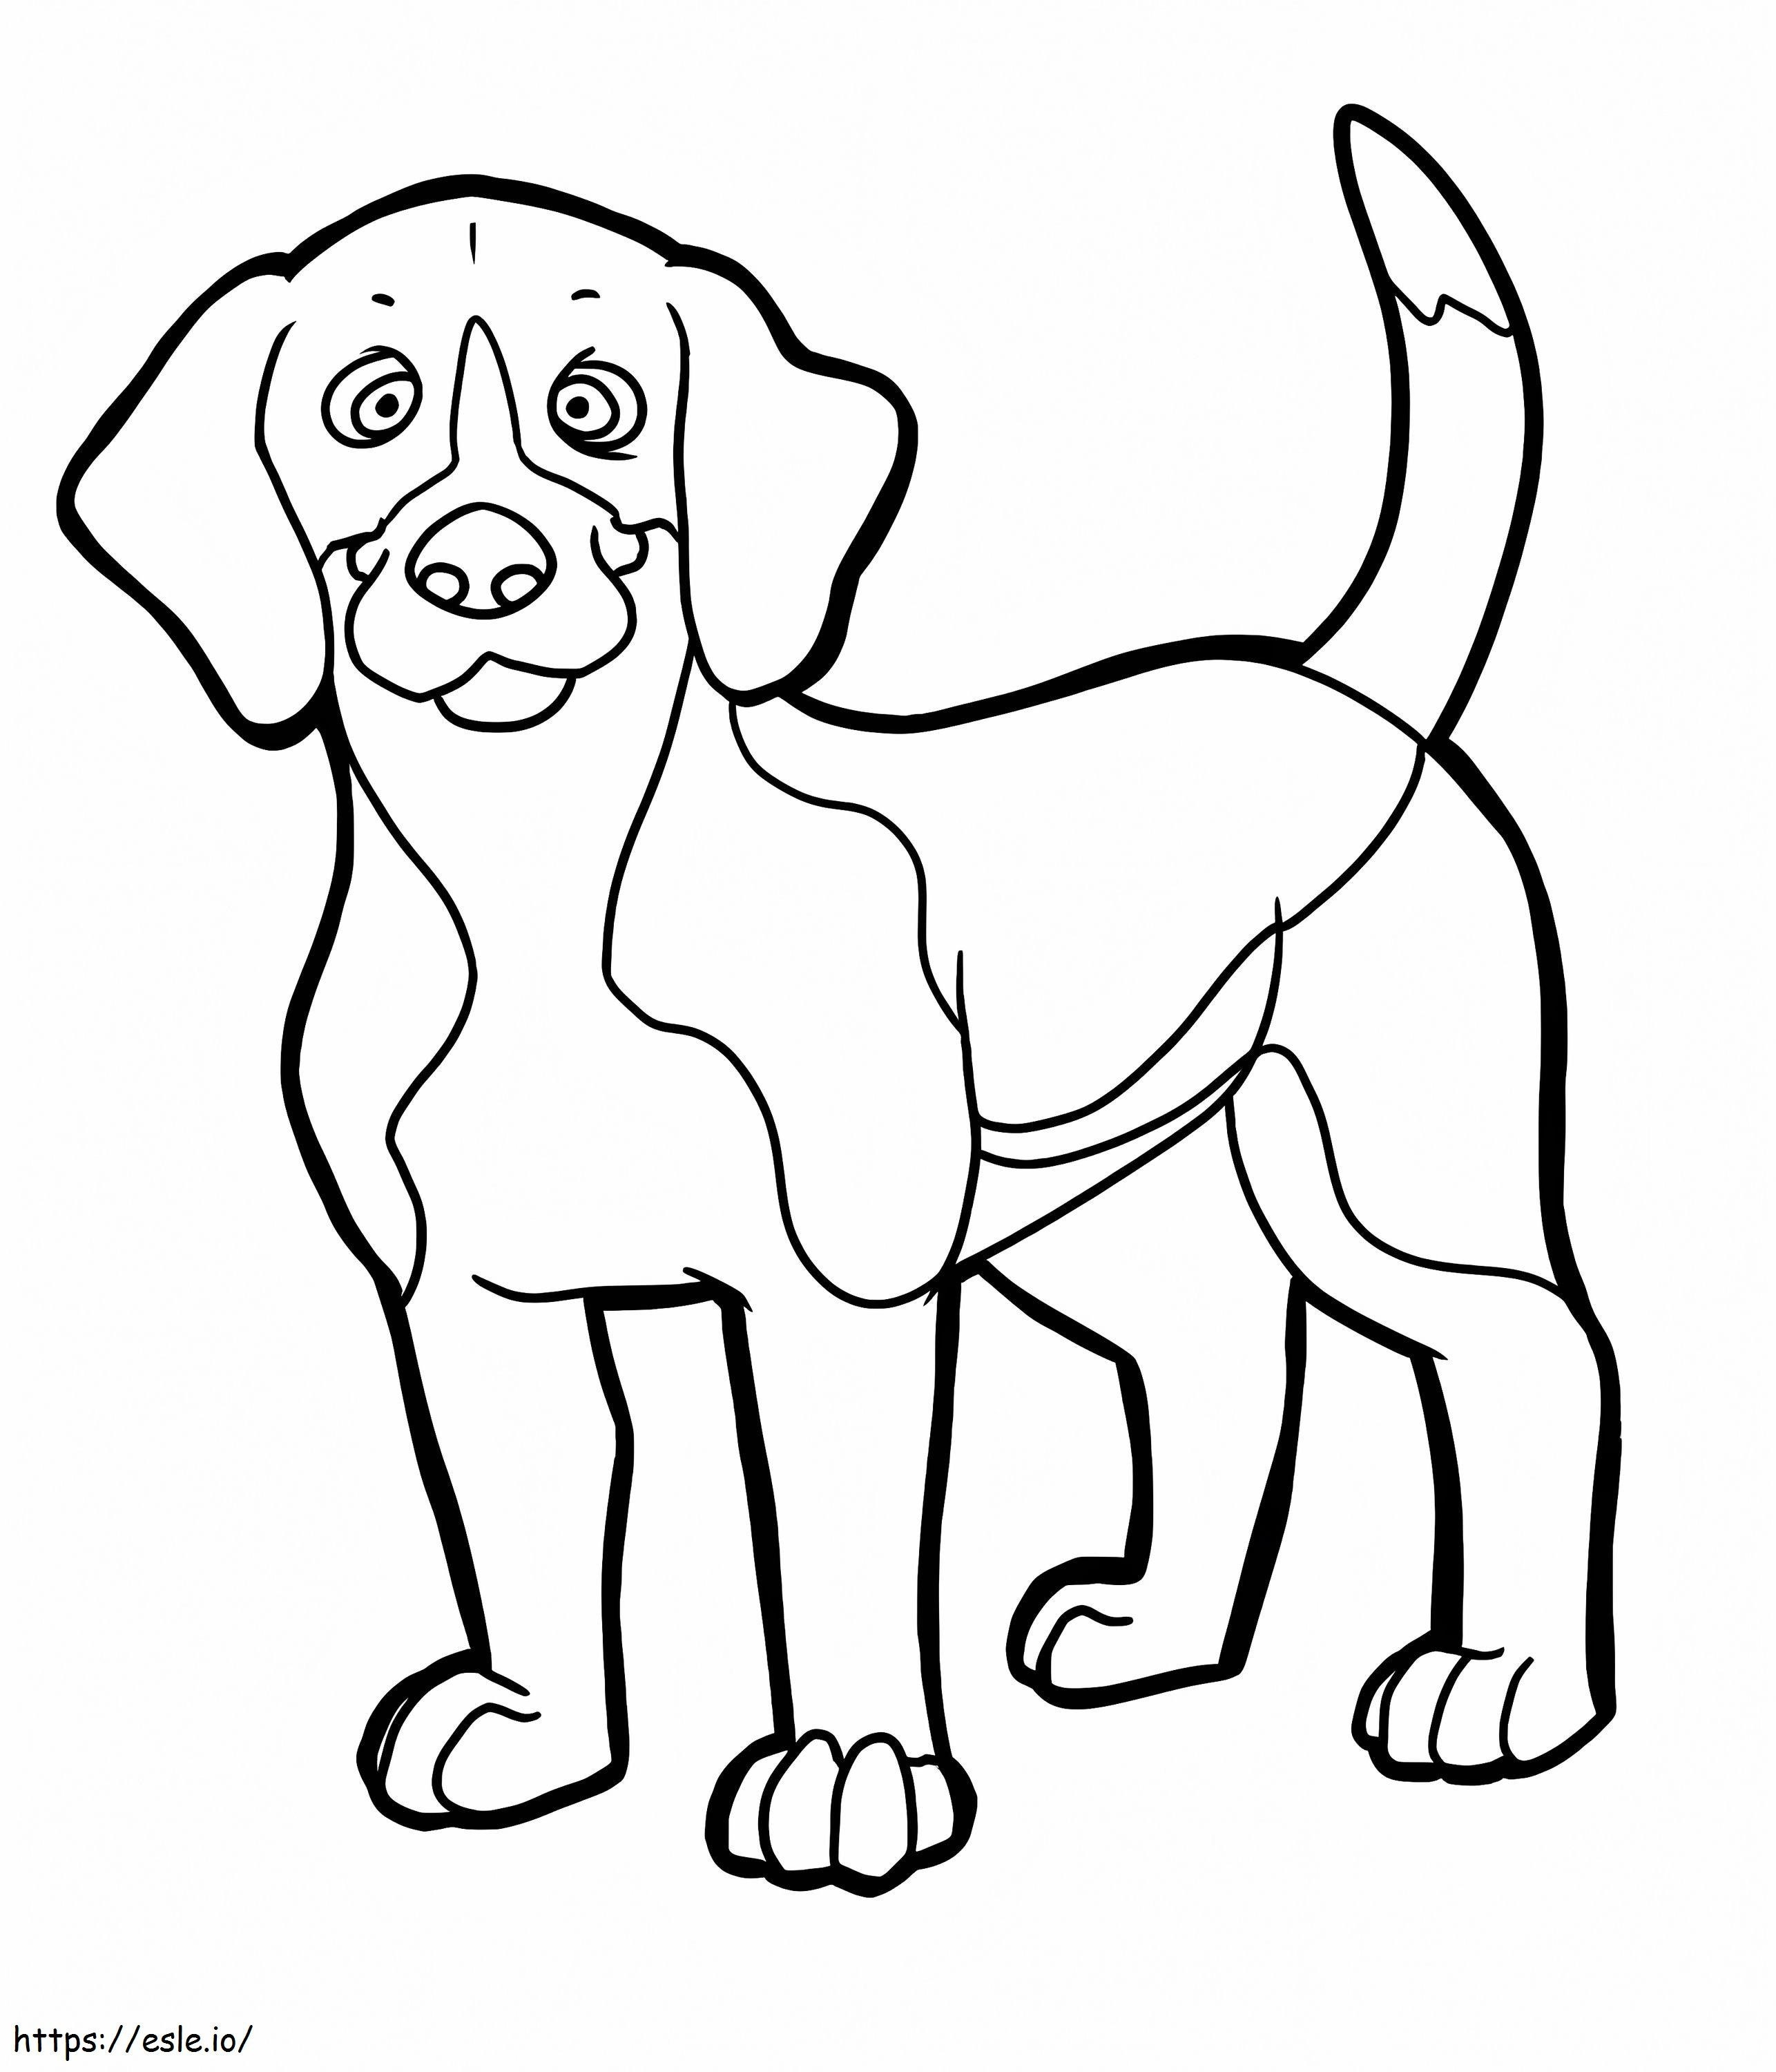 Happy Beagle coloring page